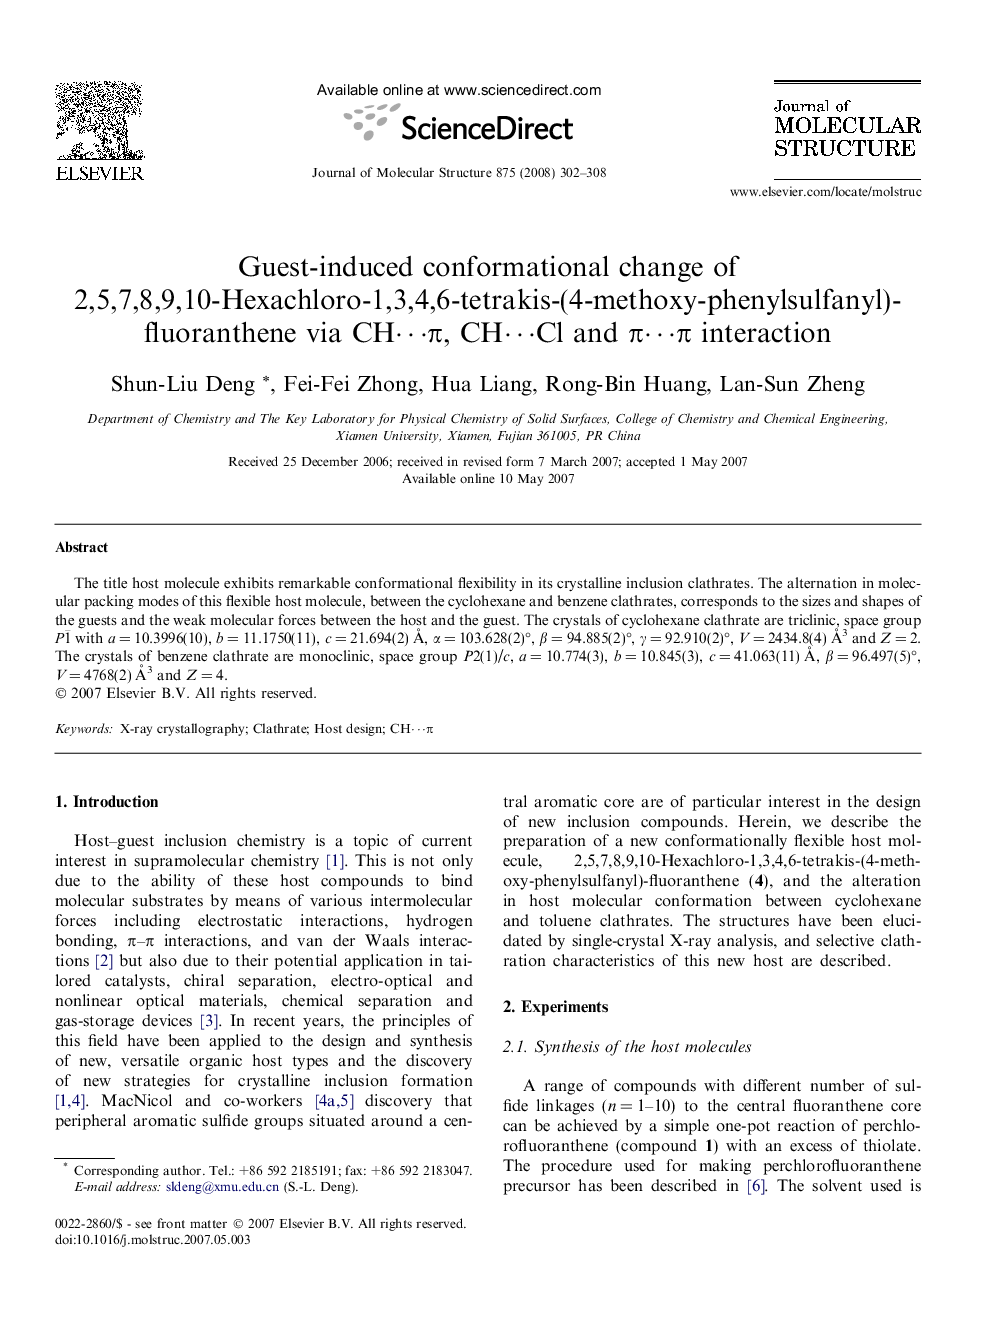 Guest-induced conformational change of 2,5,7,8,9,10-Hexachloro-1,3,4,6-tetrakis-(4-methoxy-phenylsulfanyl)-fluoranthene via CHâ¯Ï, CHâ¯Cl and Ïâ¯Ï interaction